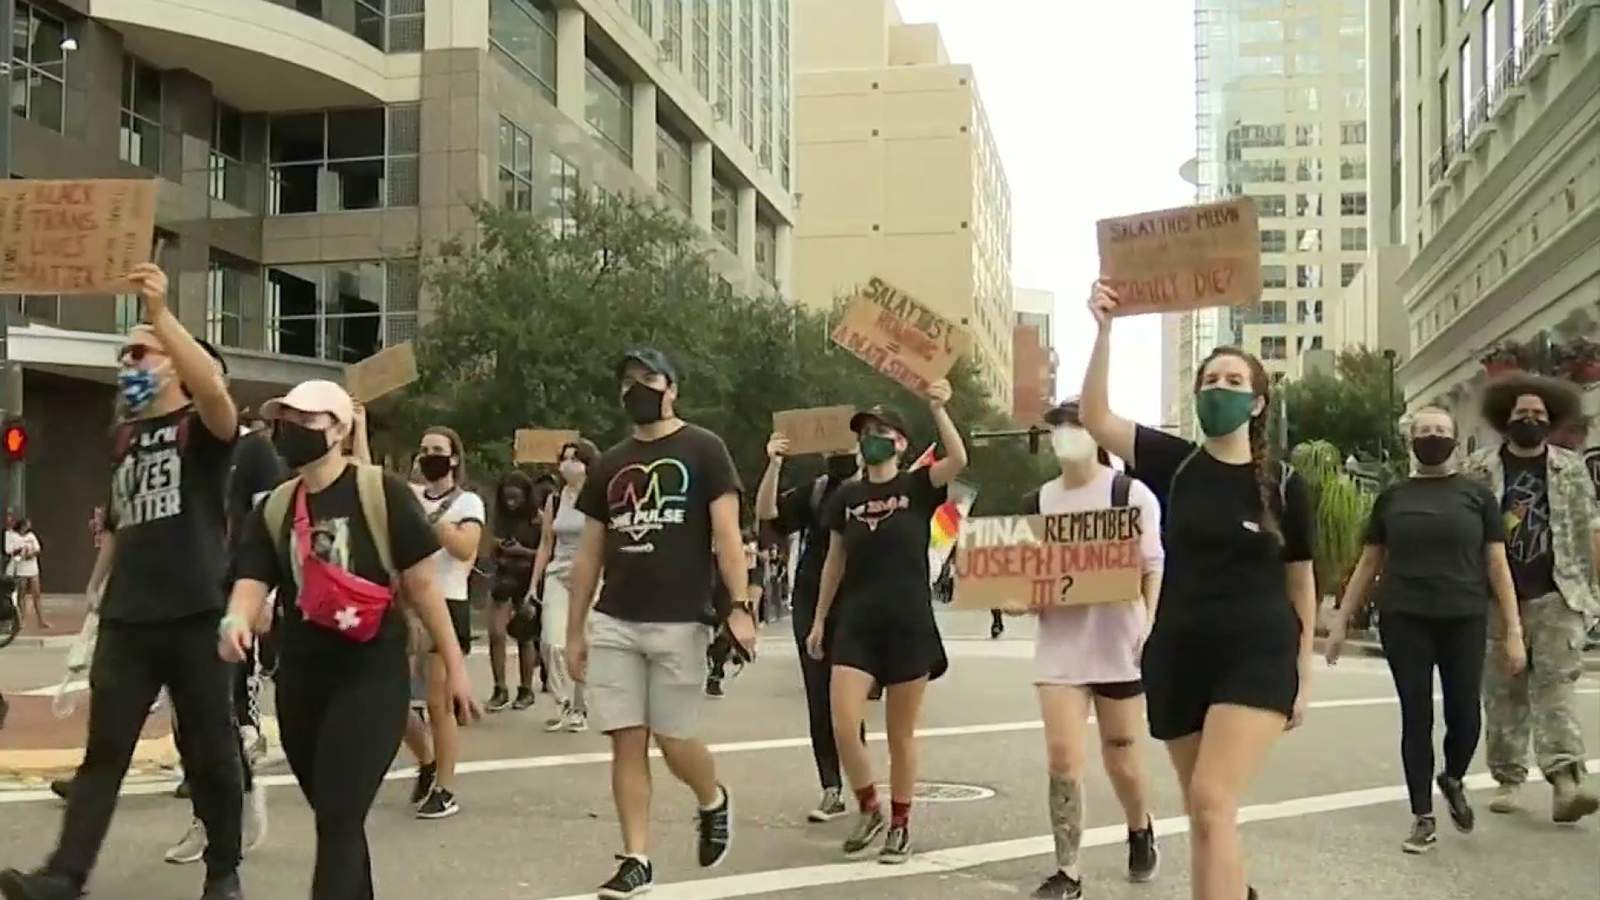 March on Washington commemoration held in Orlando